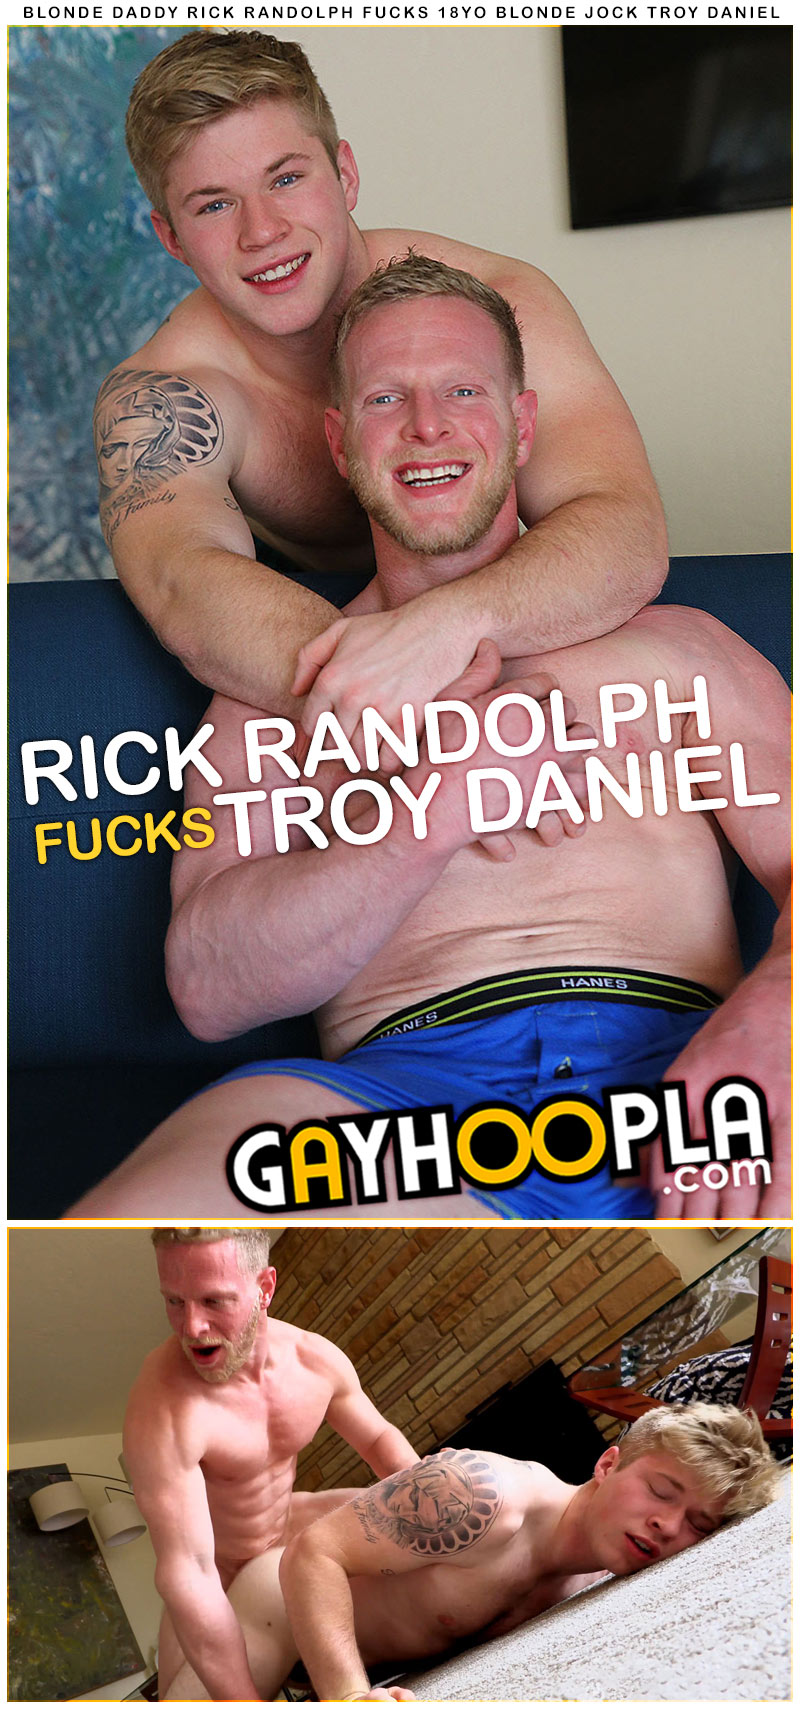 Rick Randolph Fucks Troy Daniel at GayHoopla